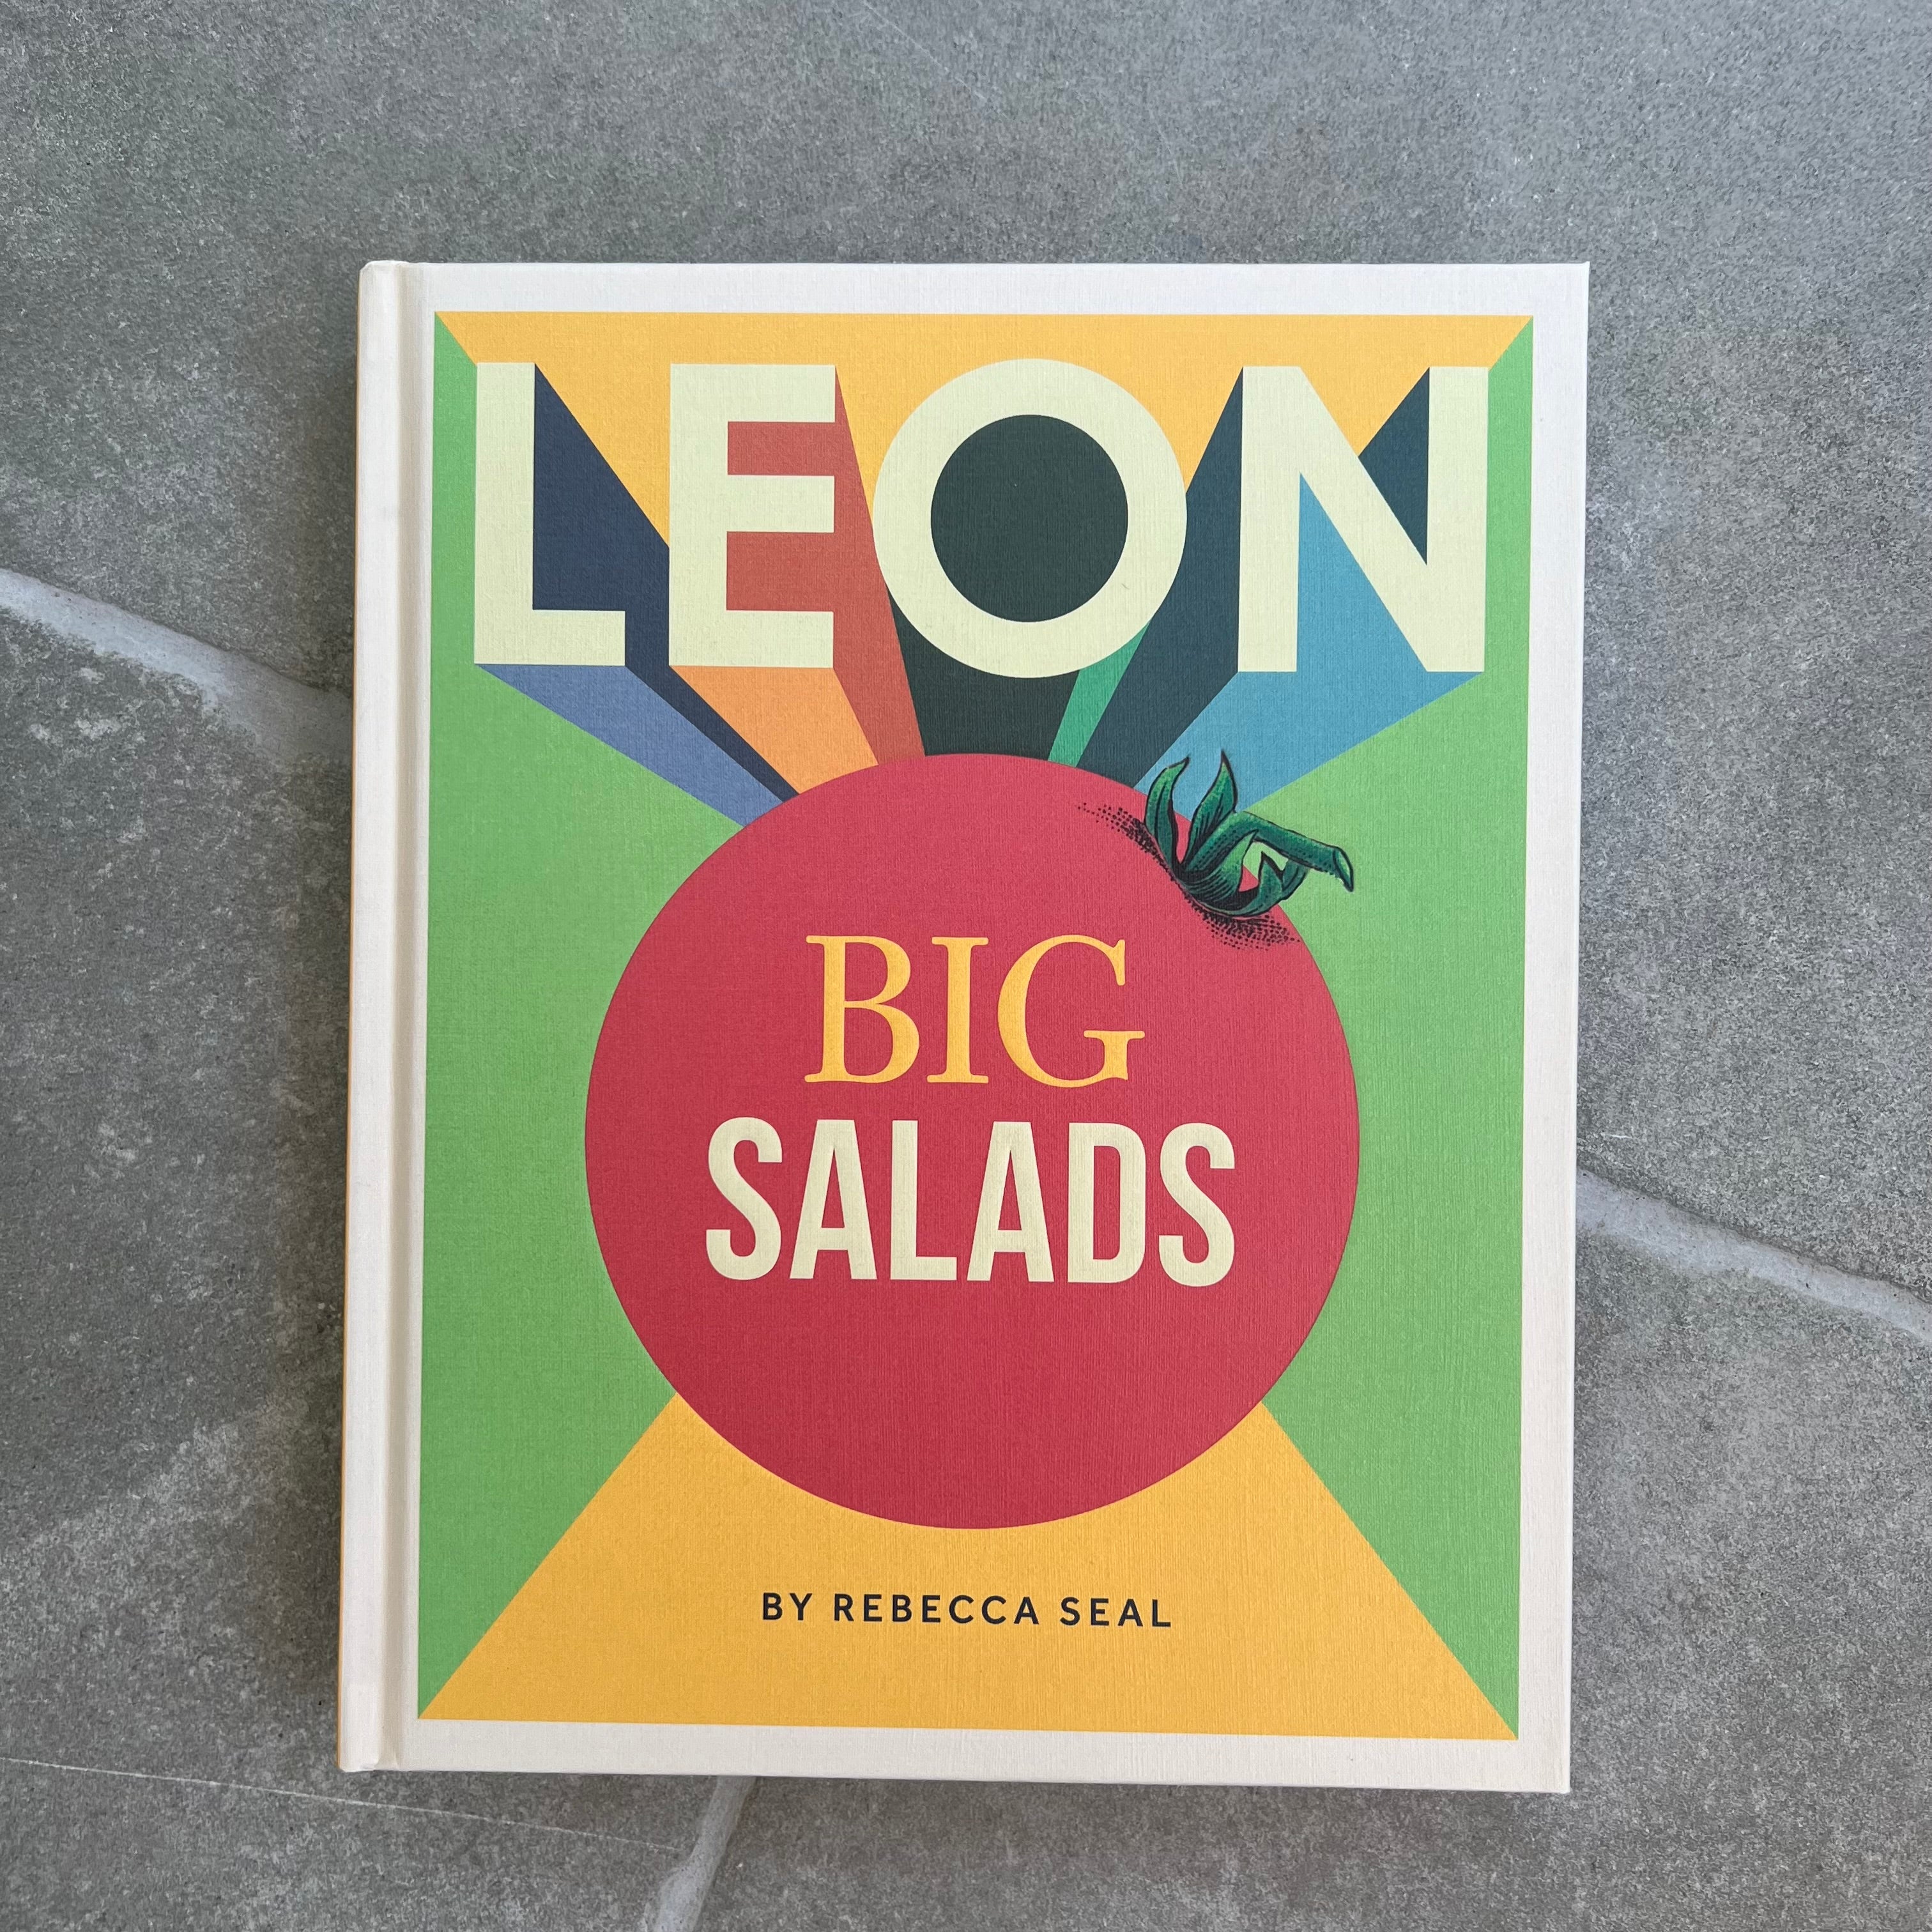 Leon - Big Salads by Rebecca Seal